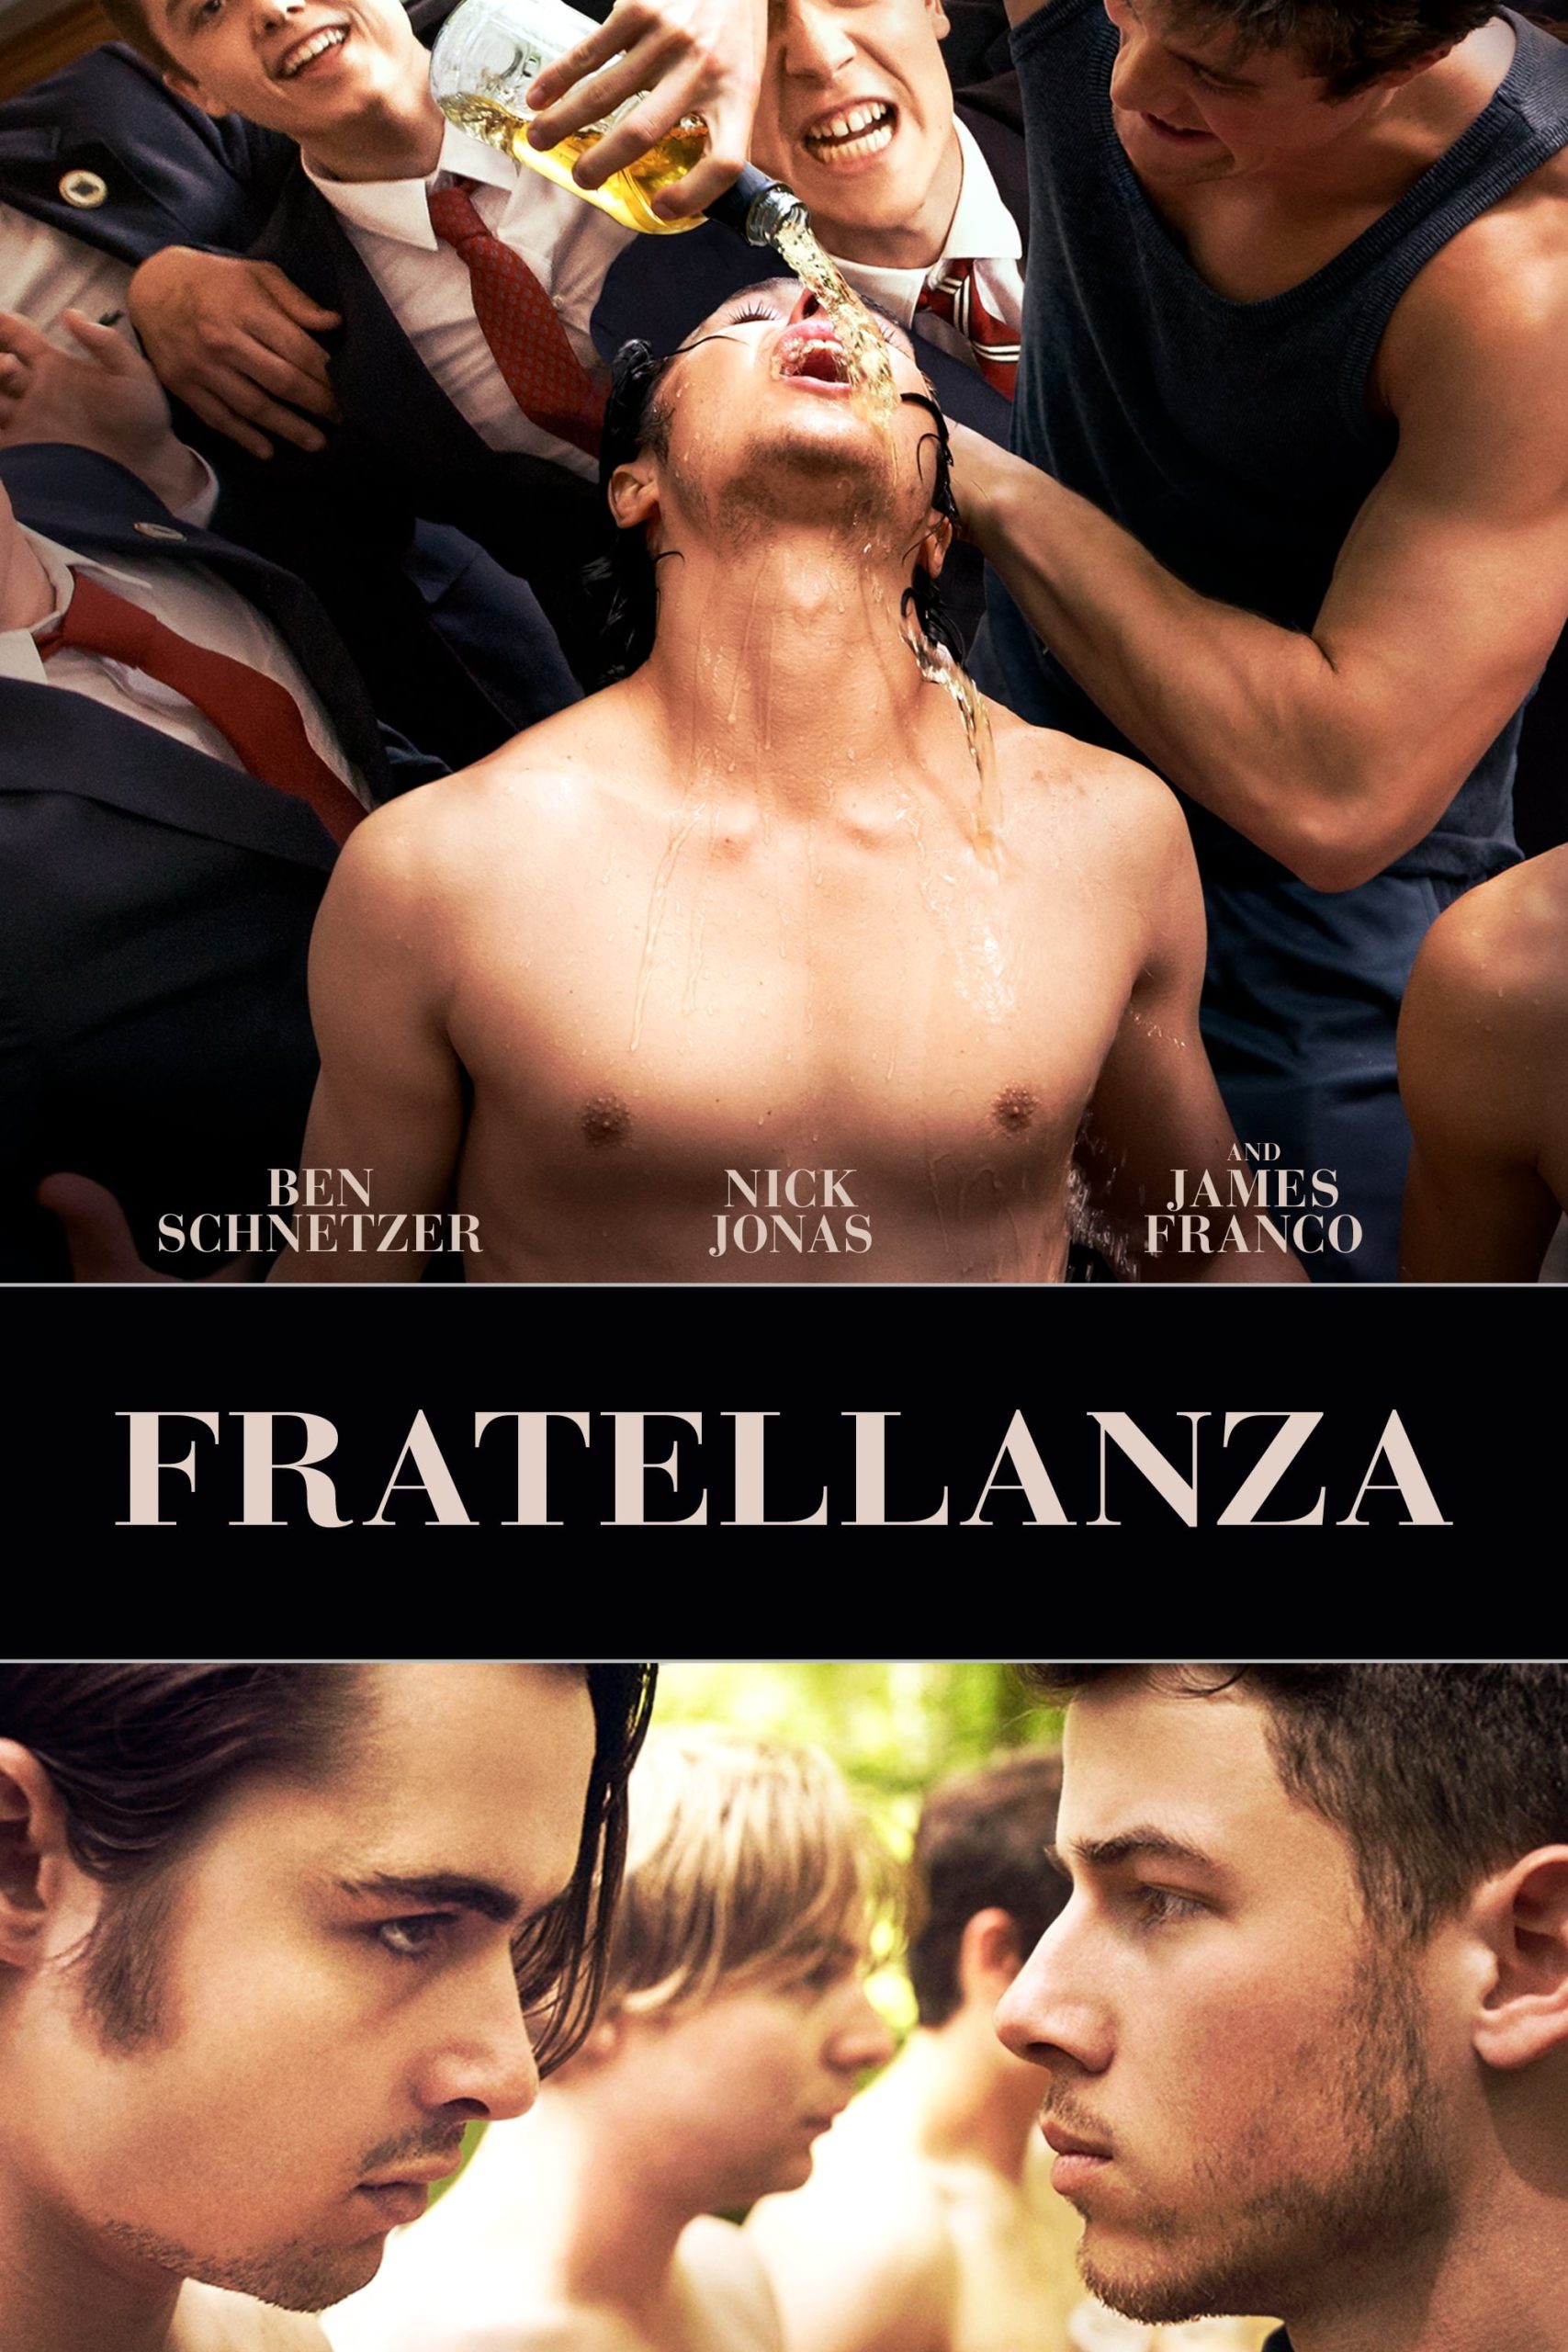 Fratellanza [HD] (2016)